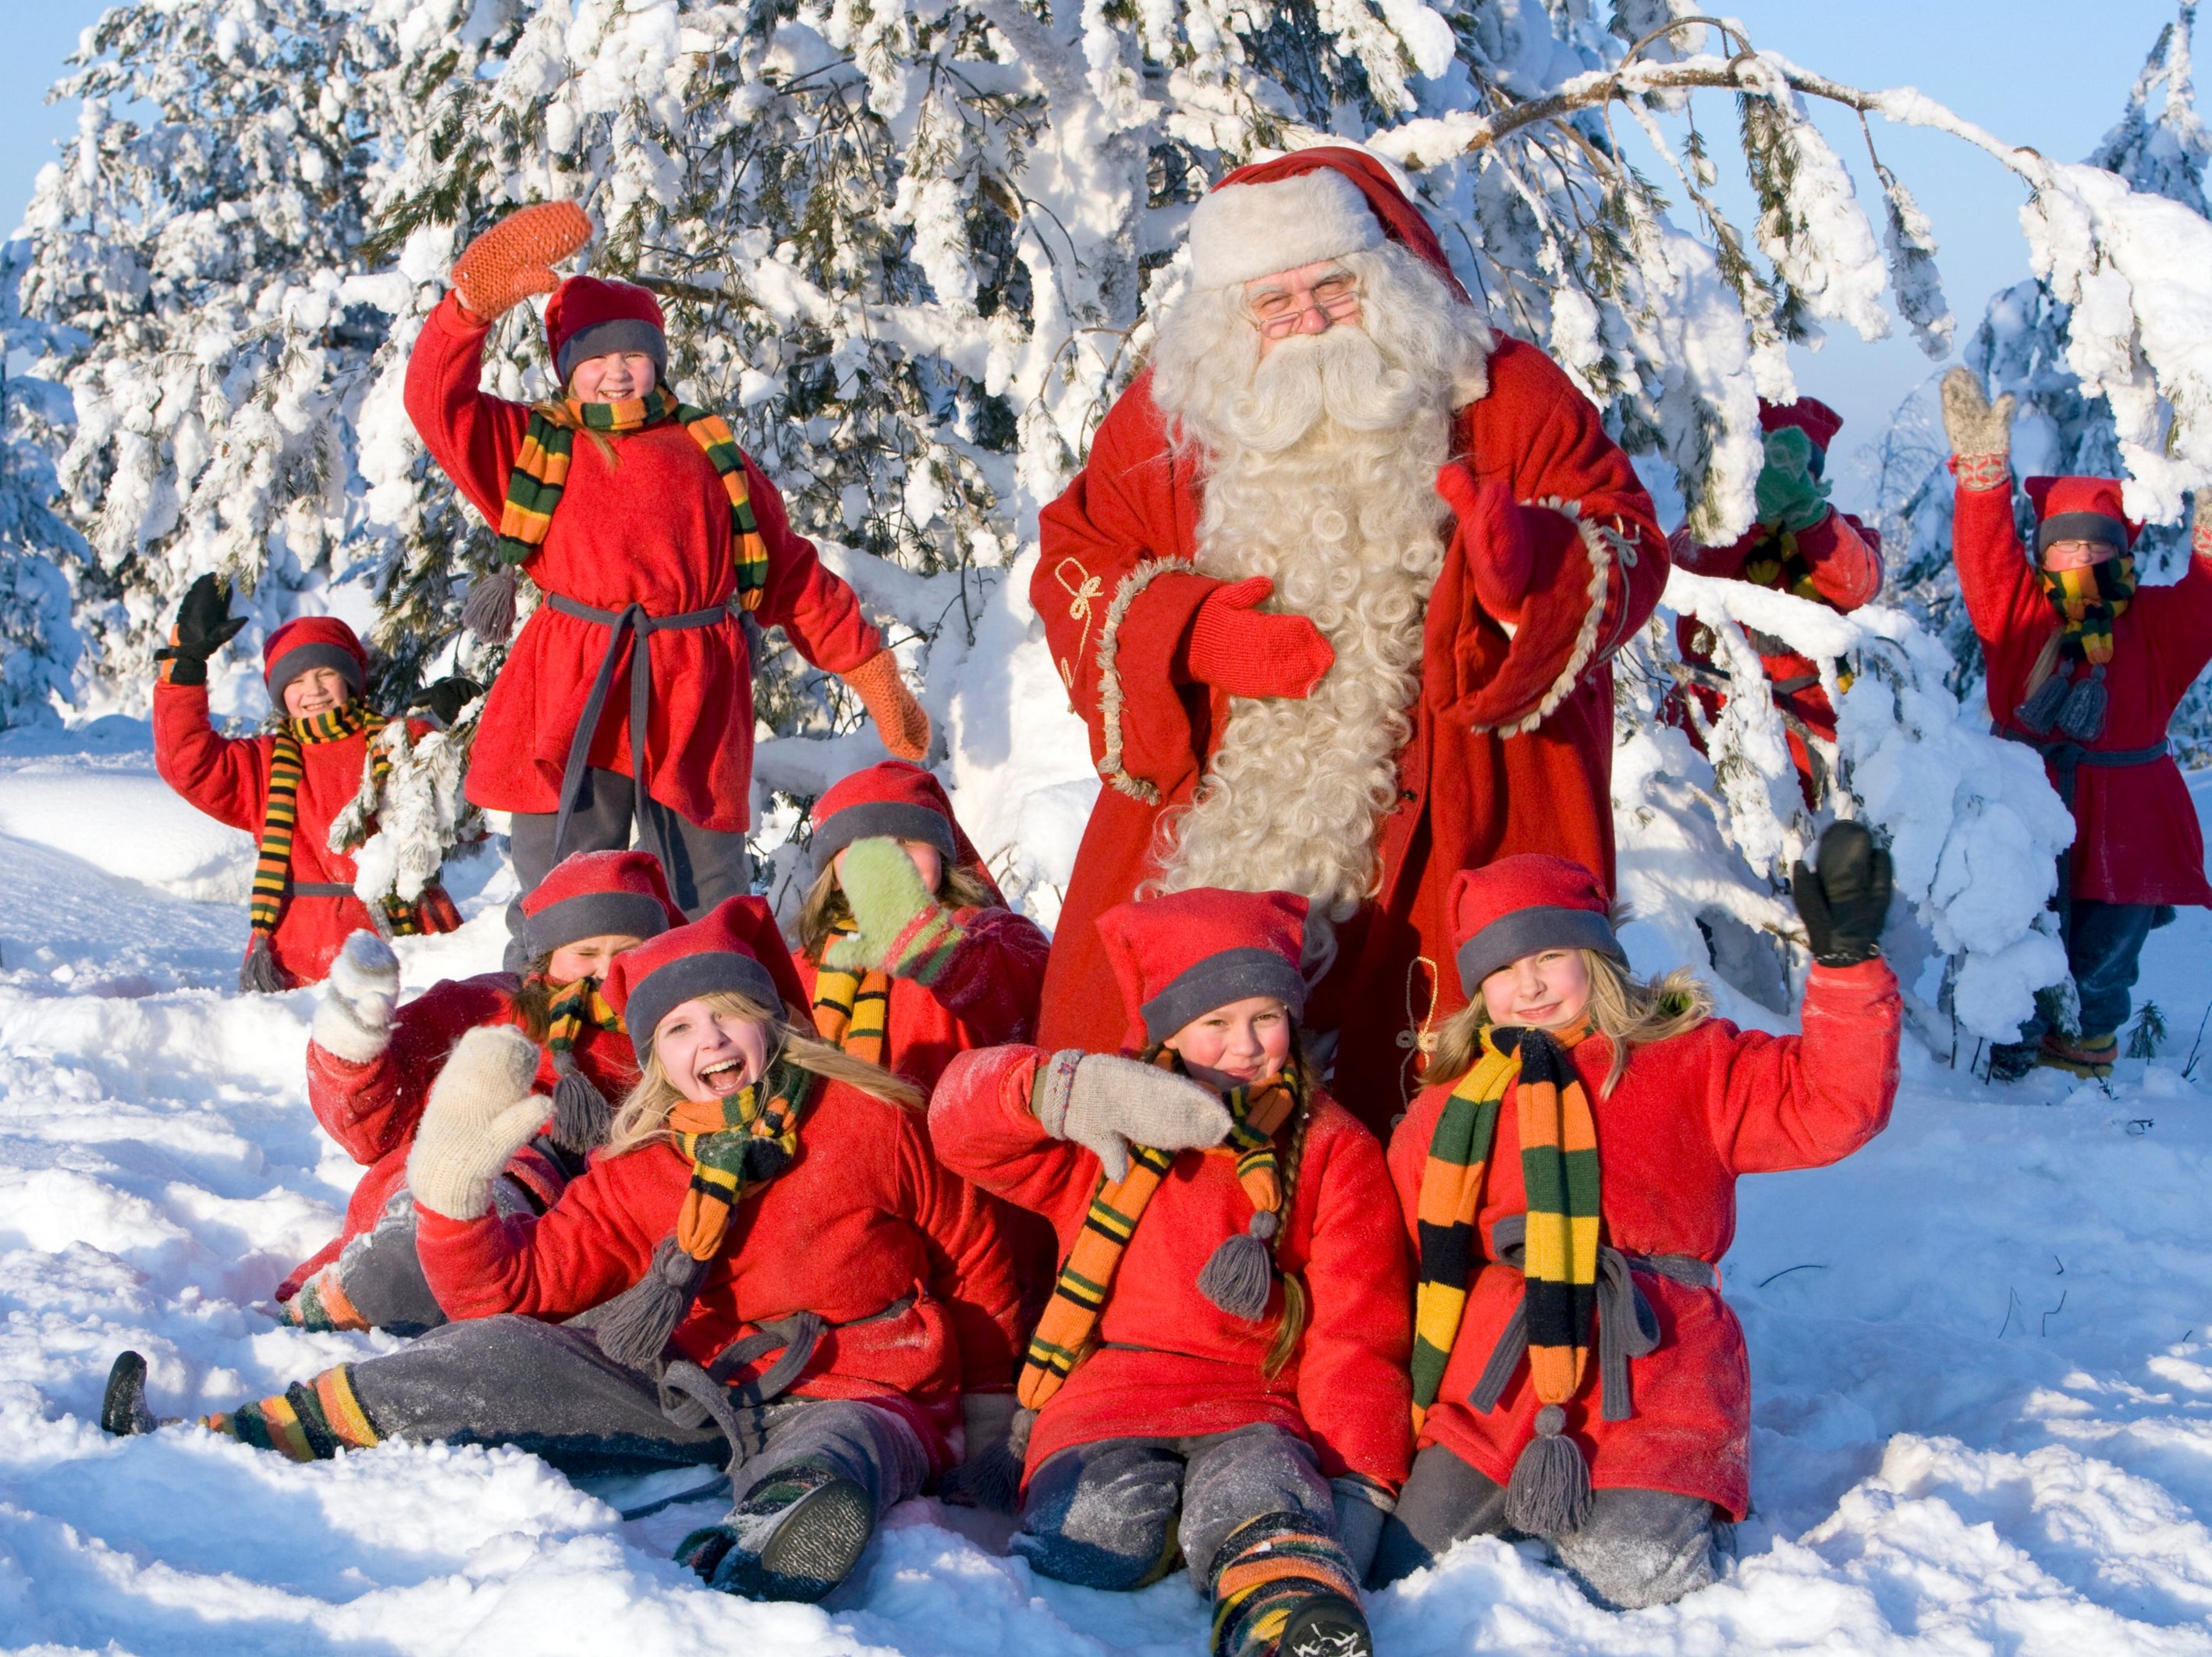 Santa and his elves